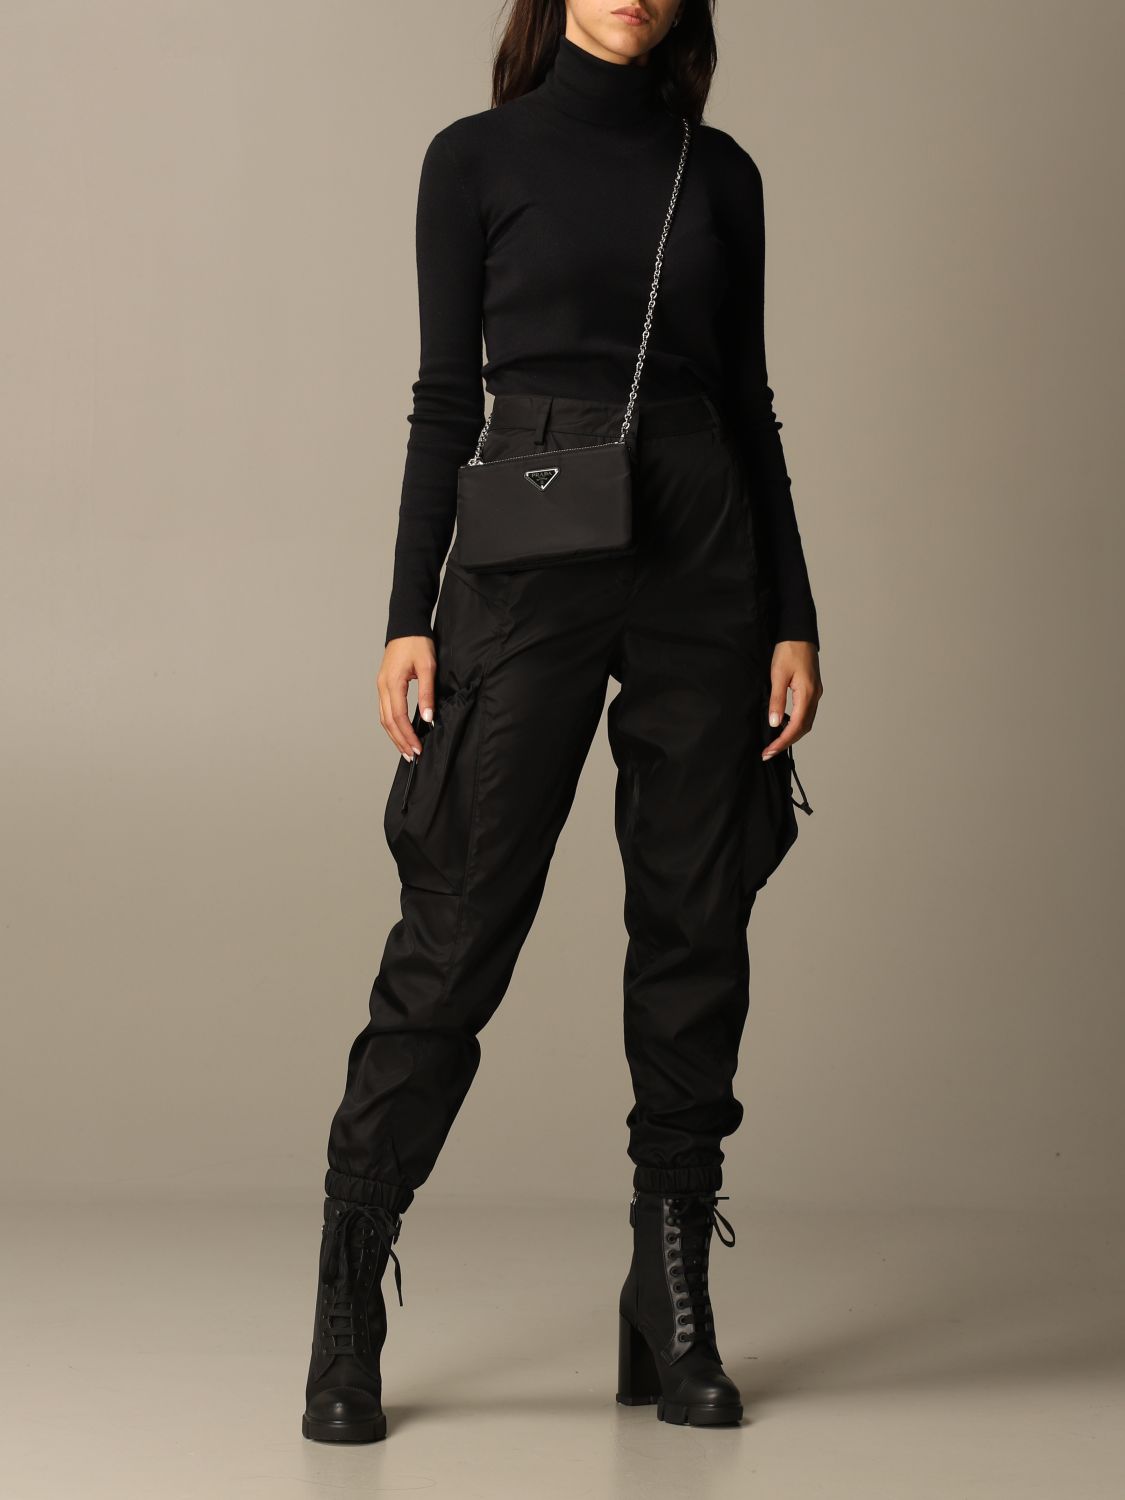 PRADA: nylon trousers with pockets | Pants Prada Women Black | Pants